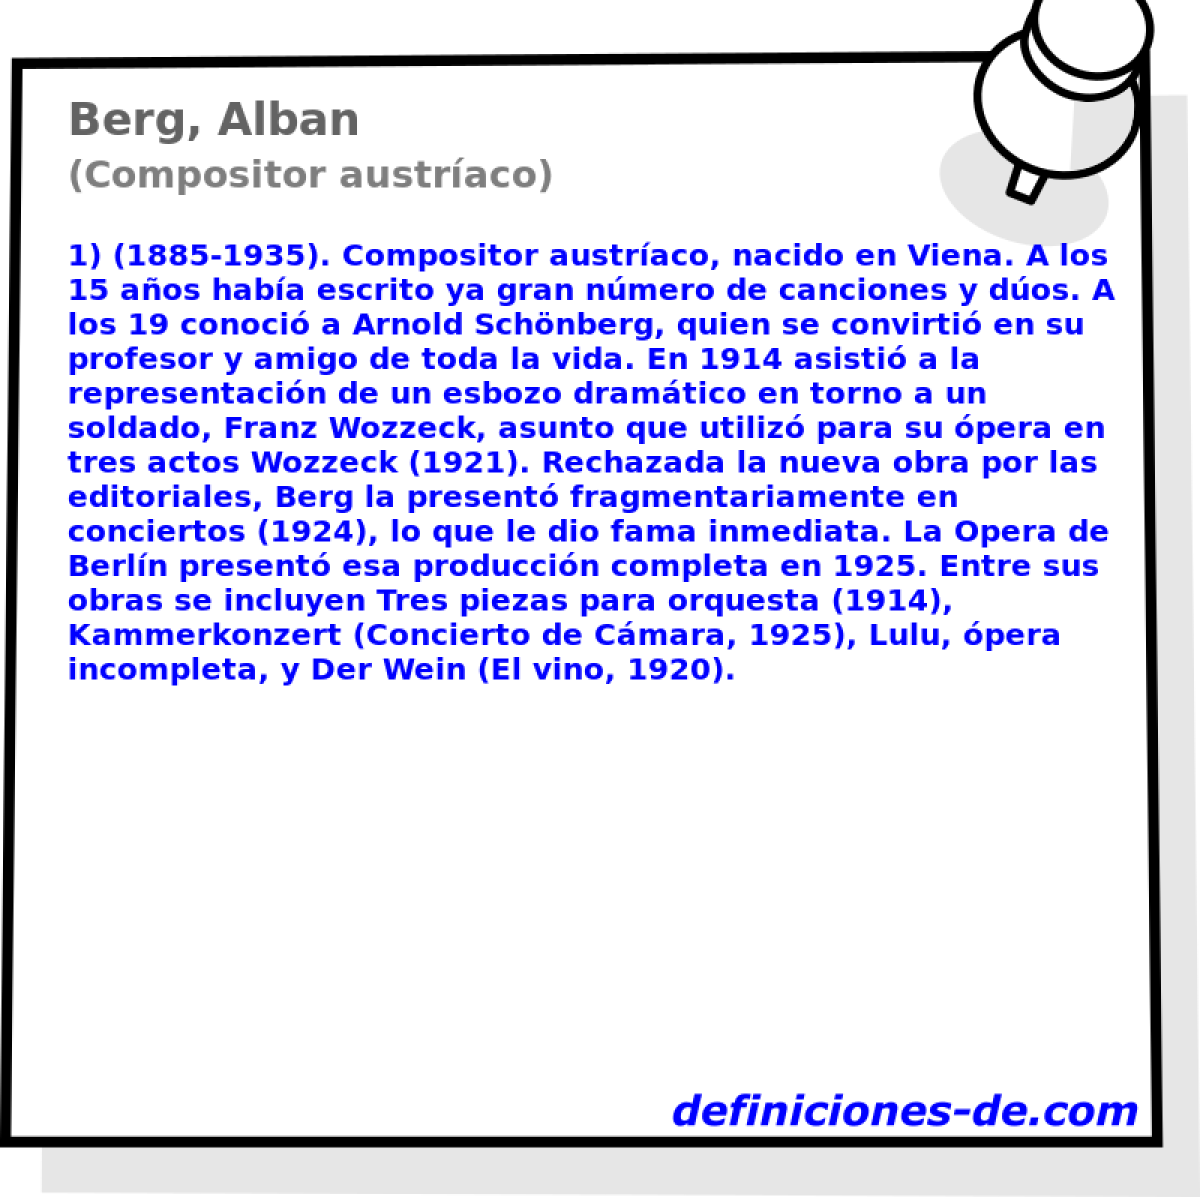 Berg, Alban (Compositor austraco)